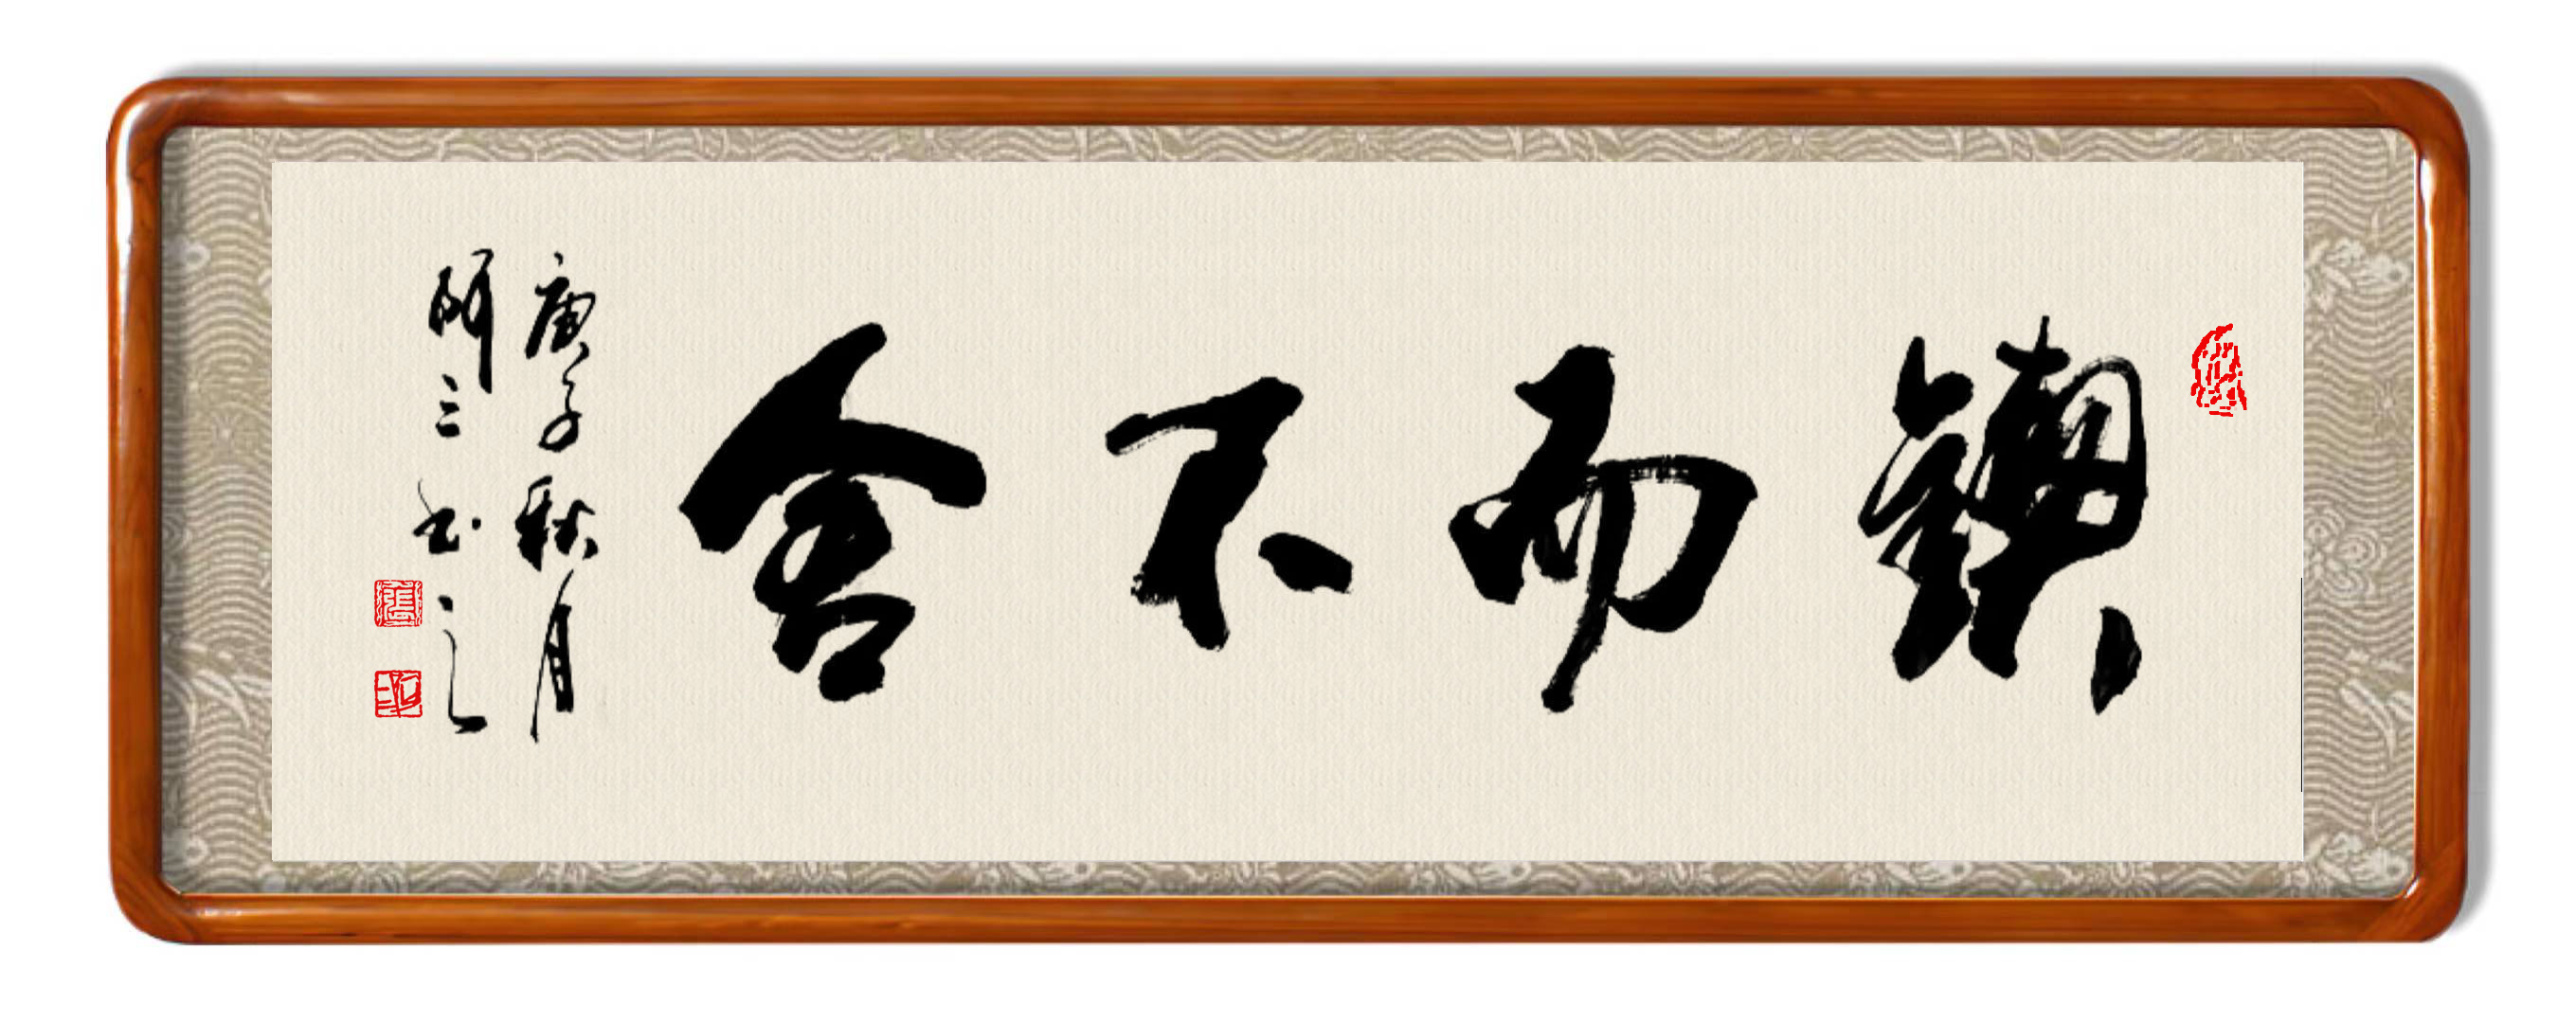 File:书法家张阿三创作的书法作品《锲而不舍》.jpg - Wikimedia Commons